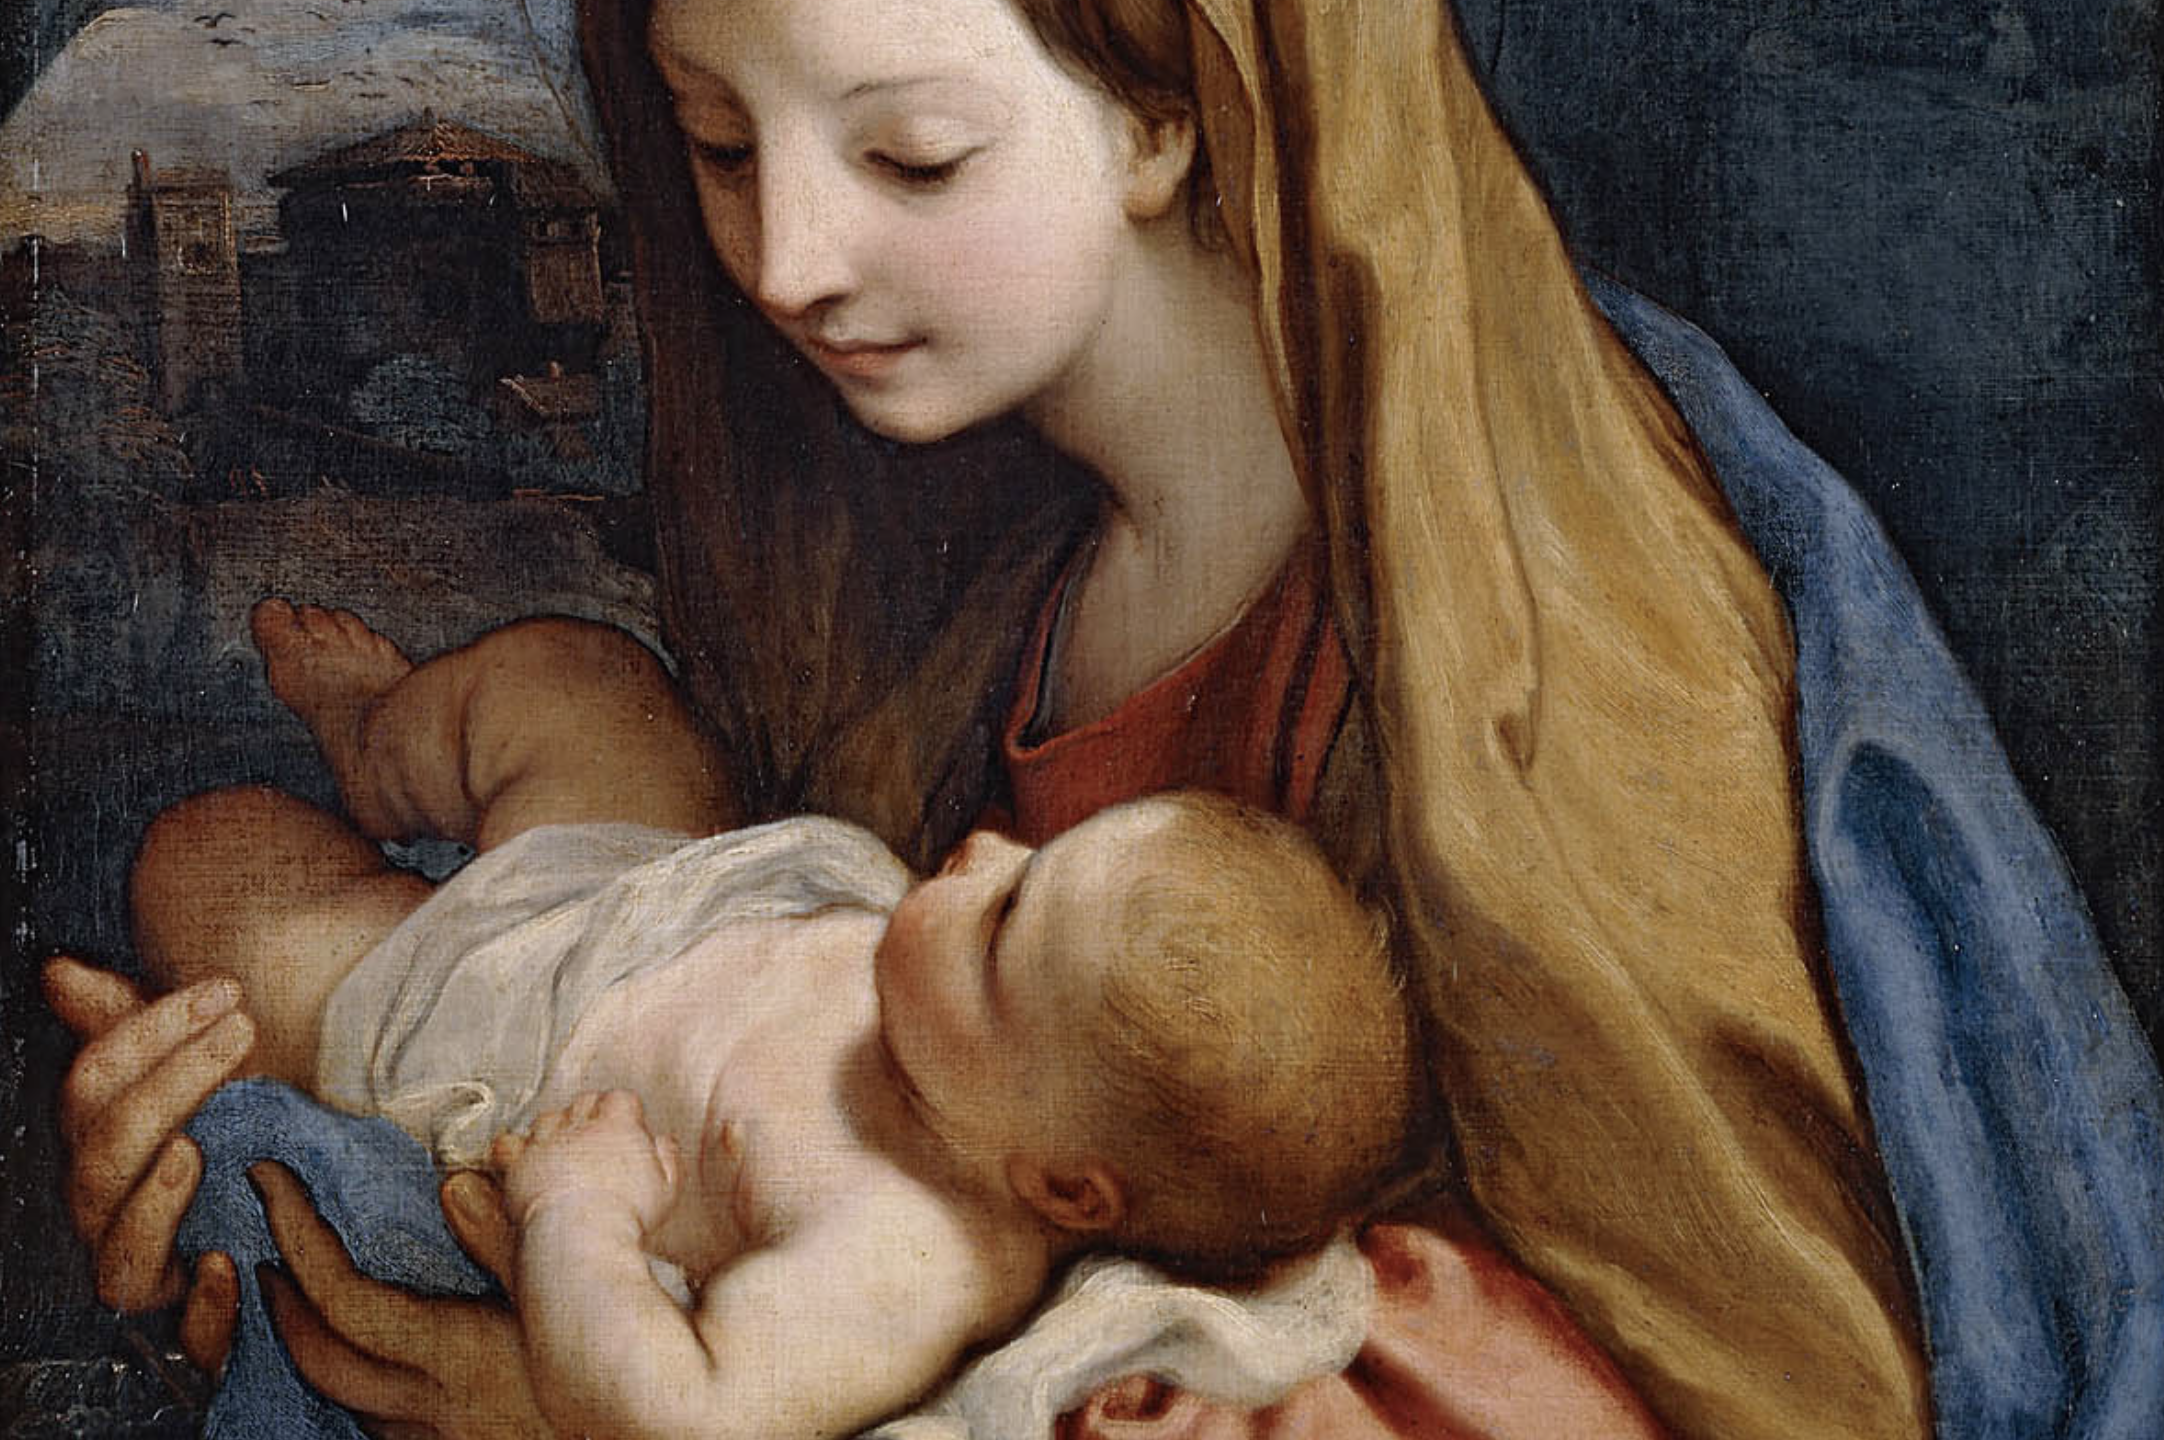 Mary with newborn Jesus